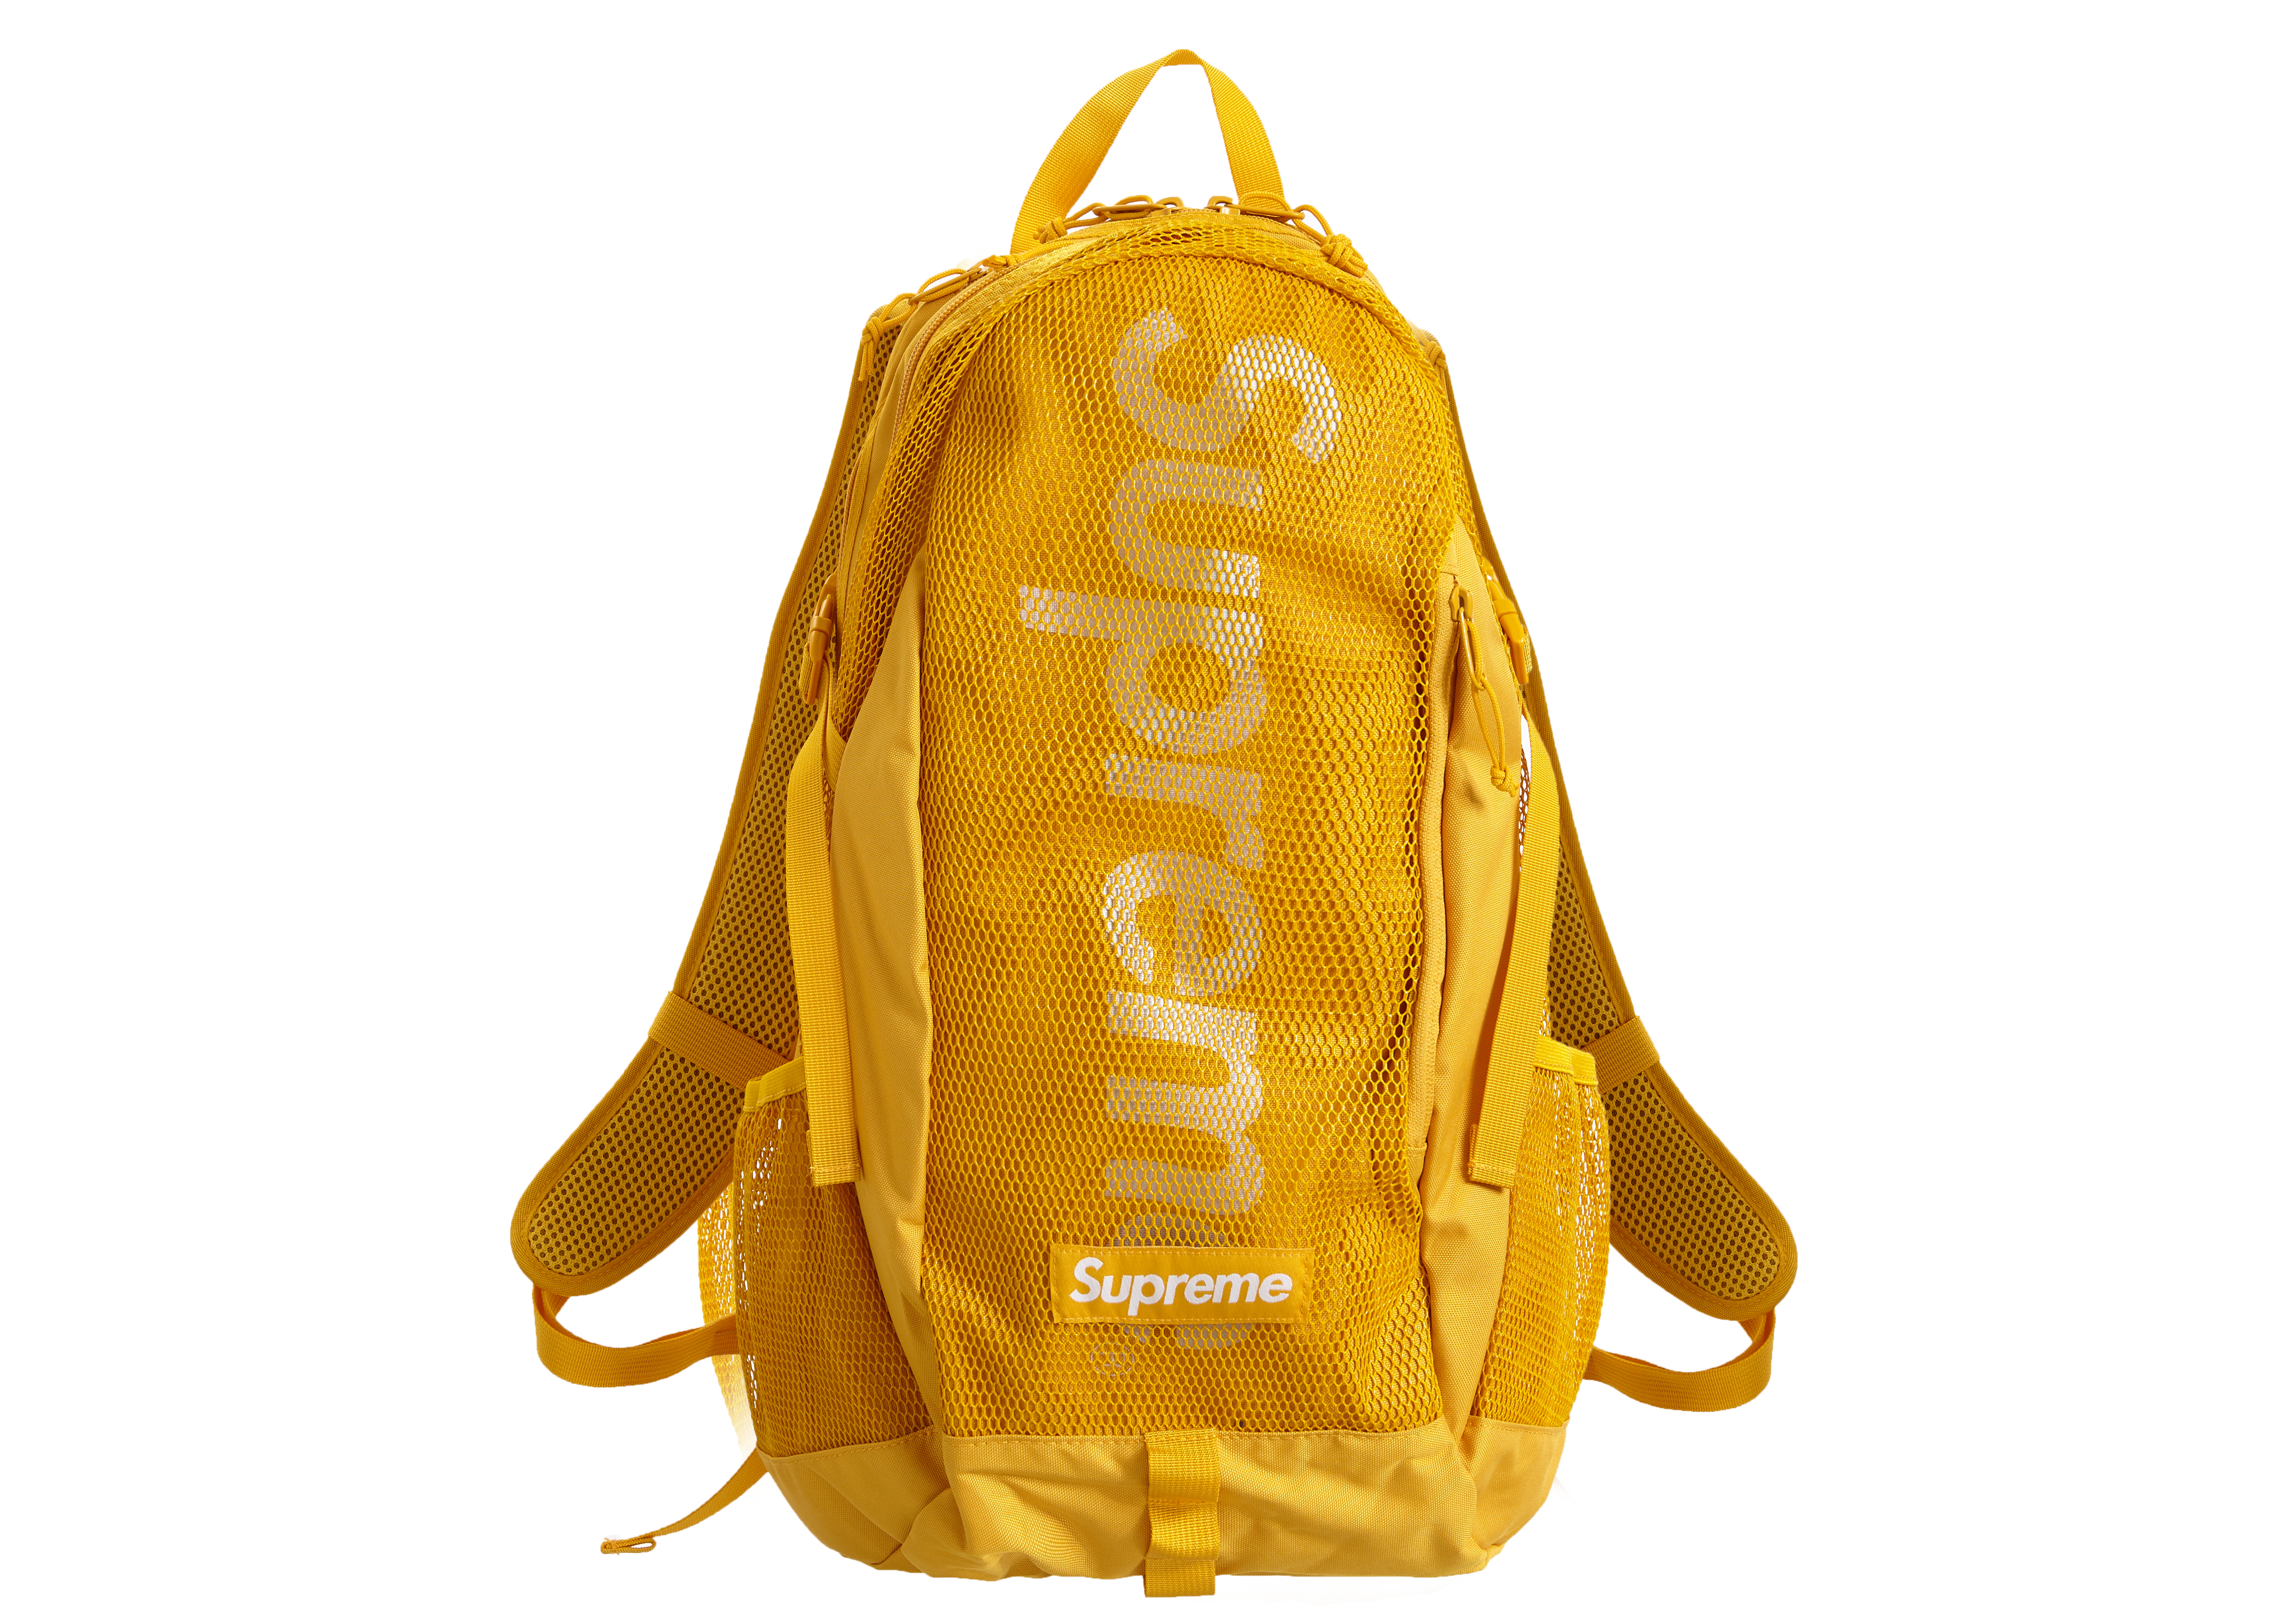 Ss20 Supreme Backpack Best Sale, 59% OFF | www.pegasusaerogroup.com